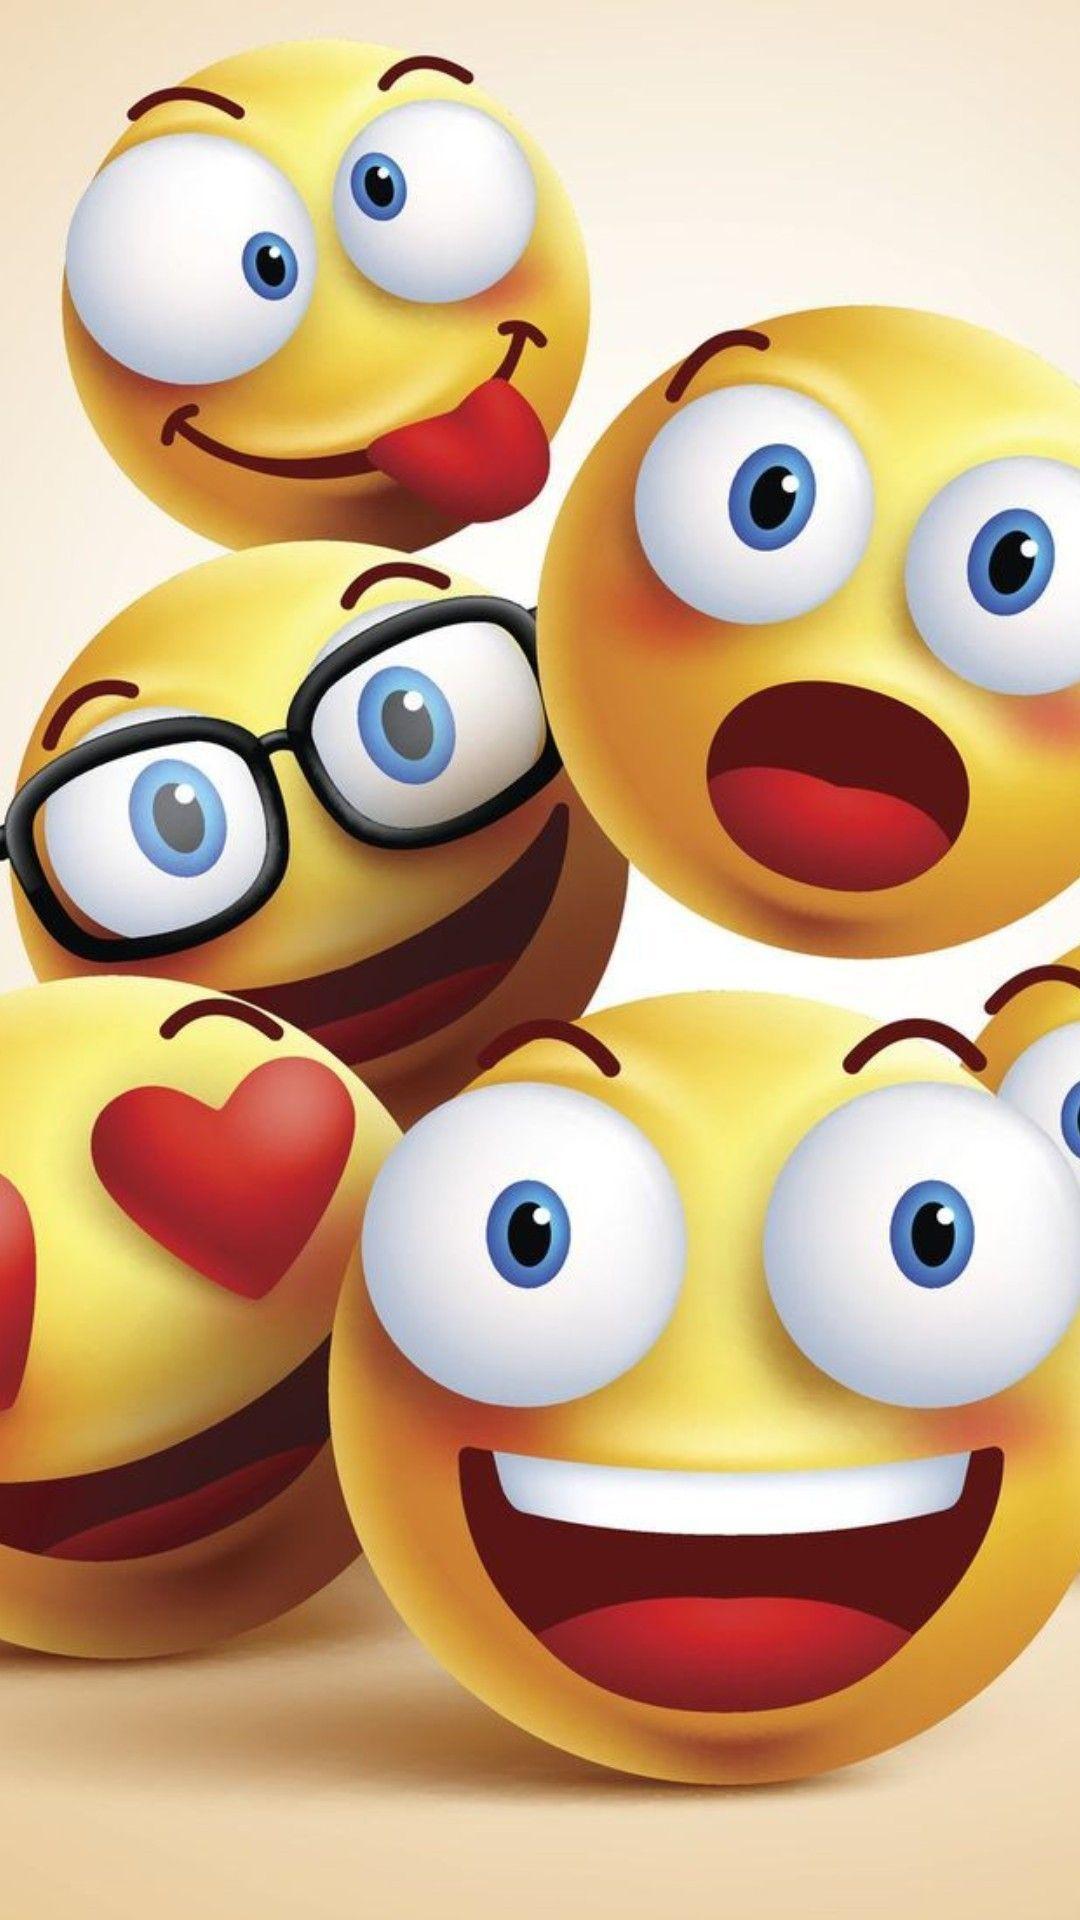 Swag Emoji Wallpapers - Top Free Swag Emoji Backgrounds - WallpaperAccess